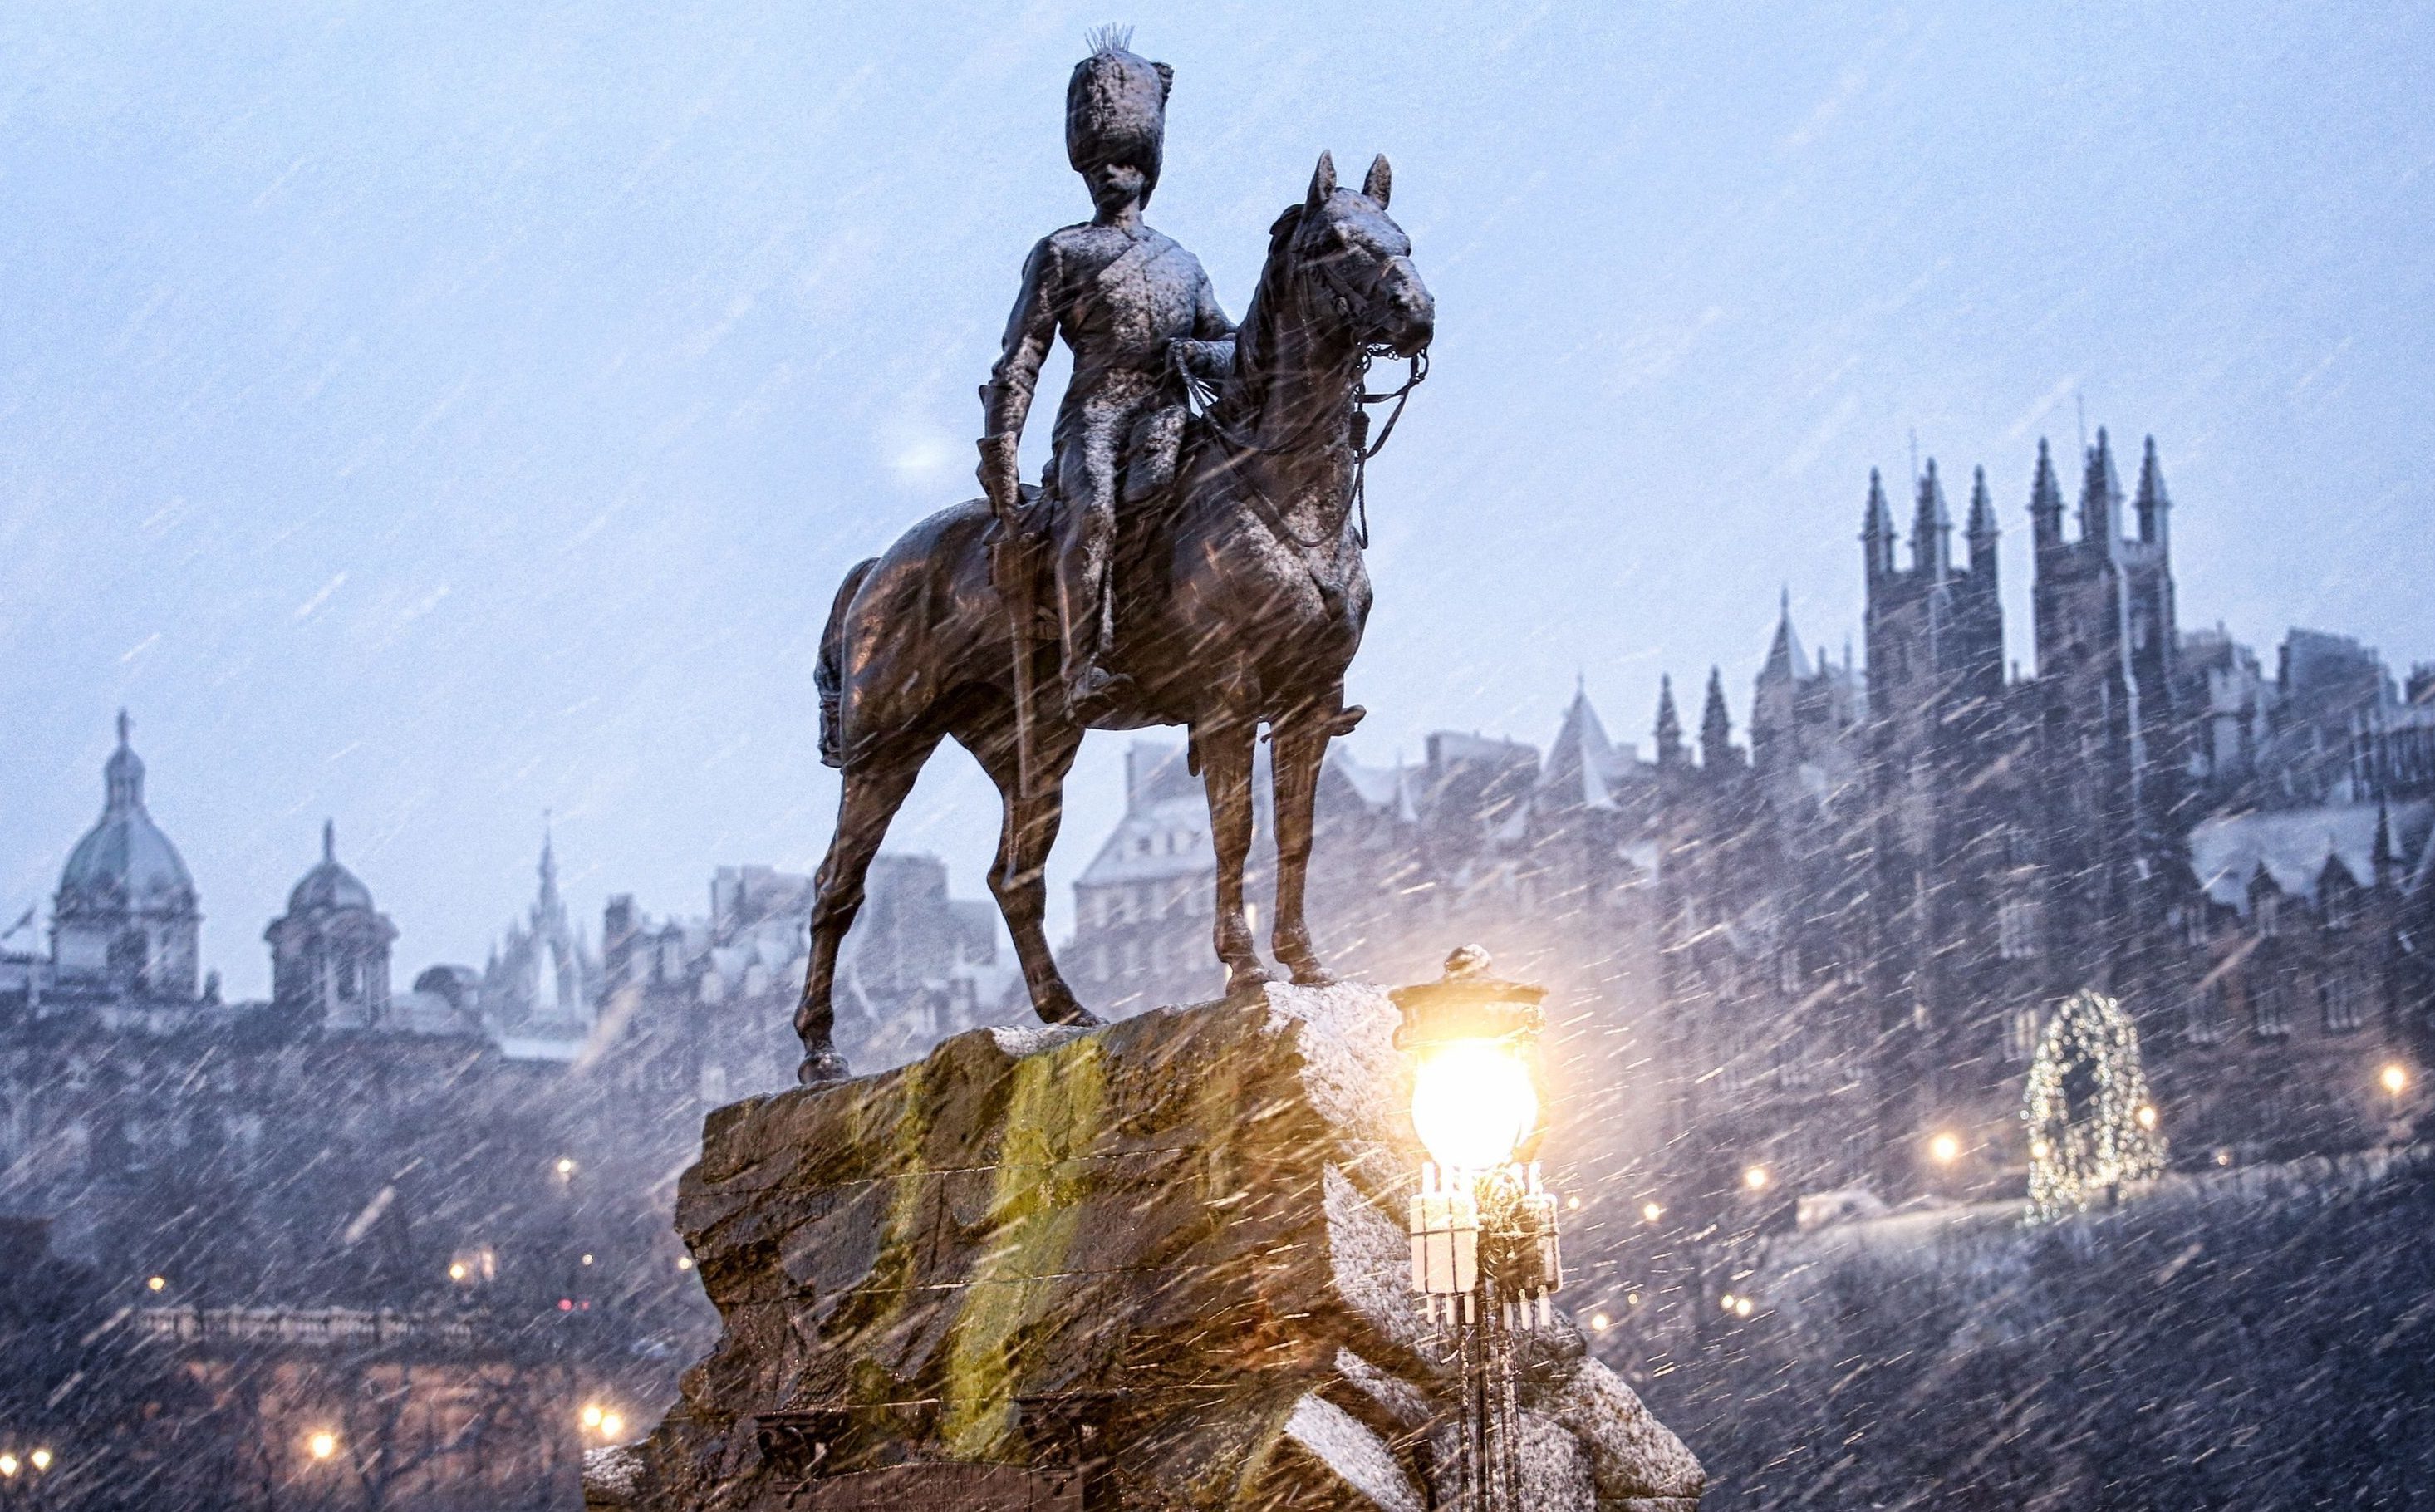 A snowy scene in Edinburgh.